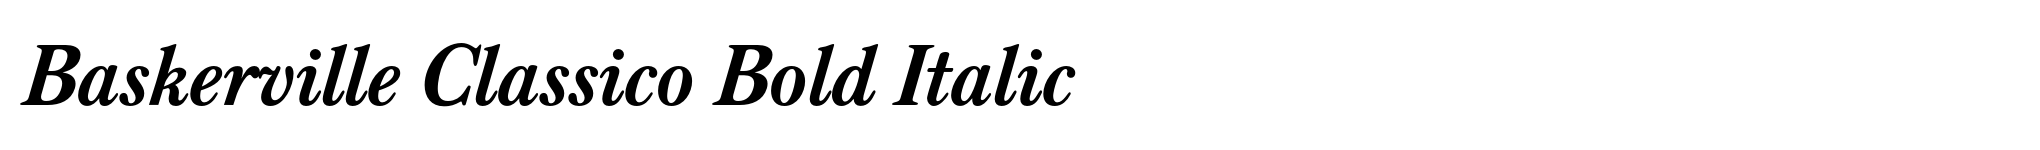 Baskerville Classico Bold Italic image